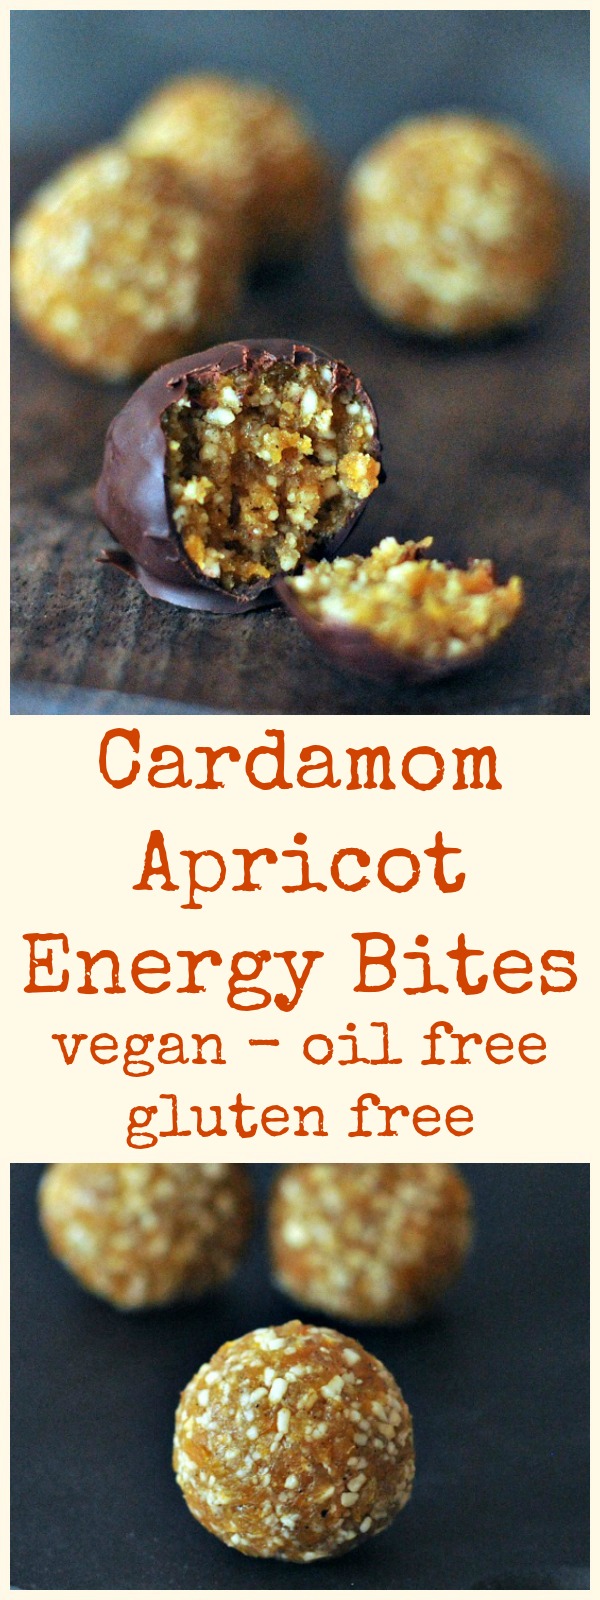 Cardamom Apricot Energy Bites @spabettie #vegan #oilfree #glutenfree